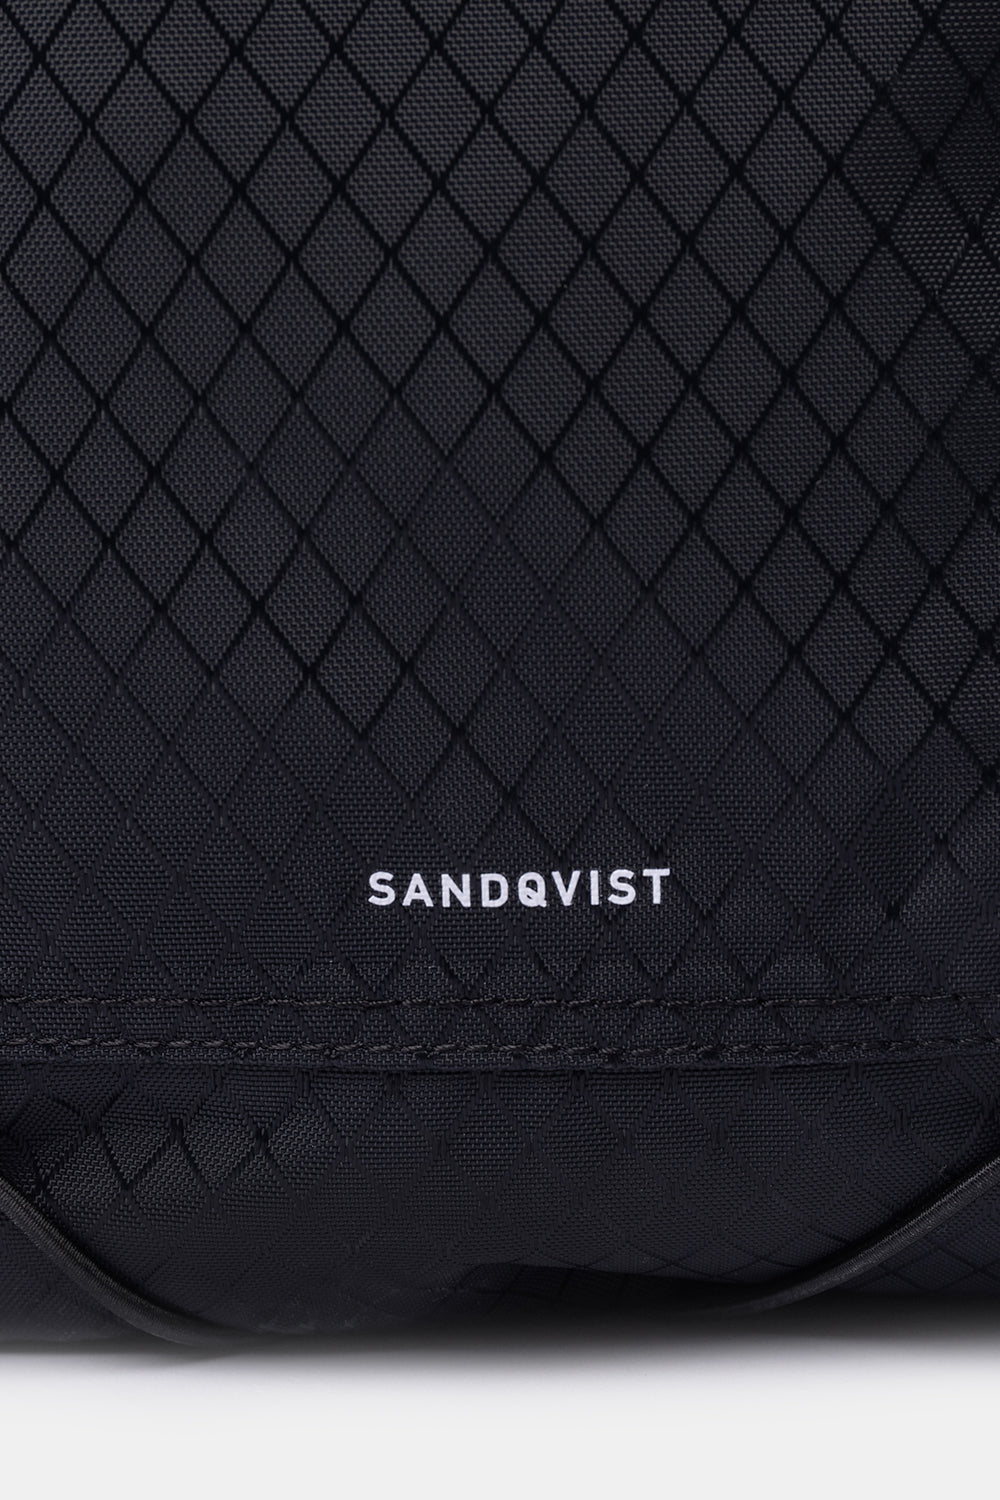 Sandqvist Nils Backpack (Black)